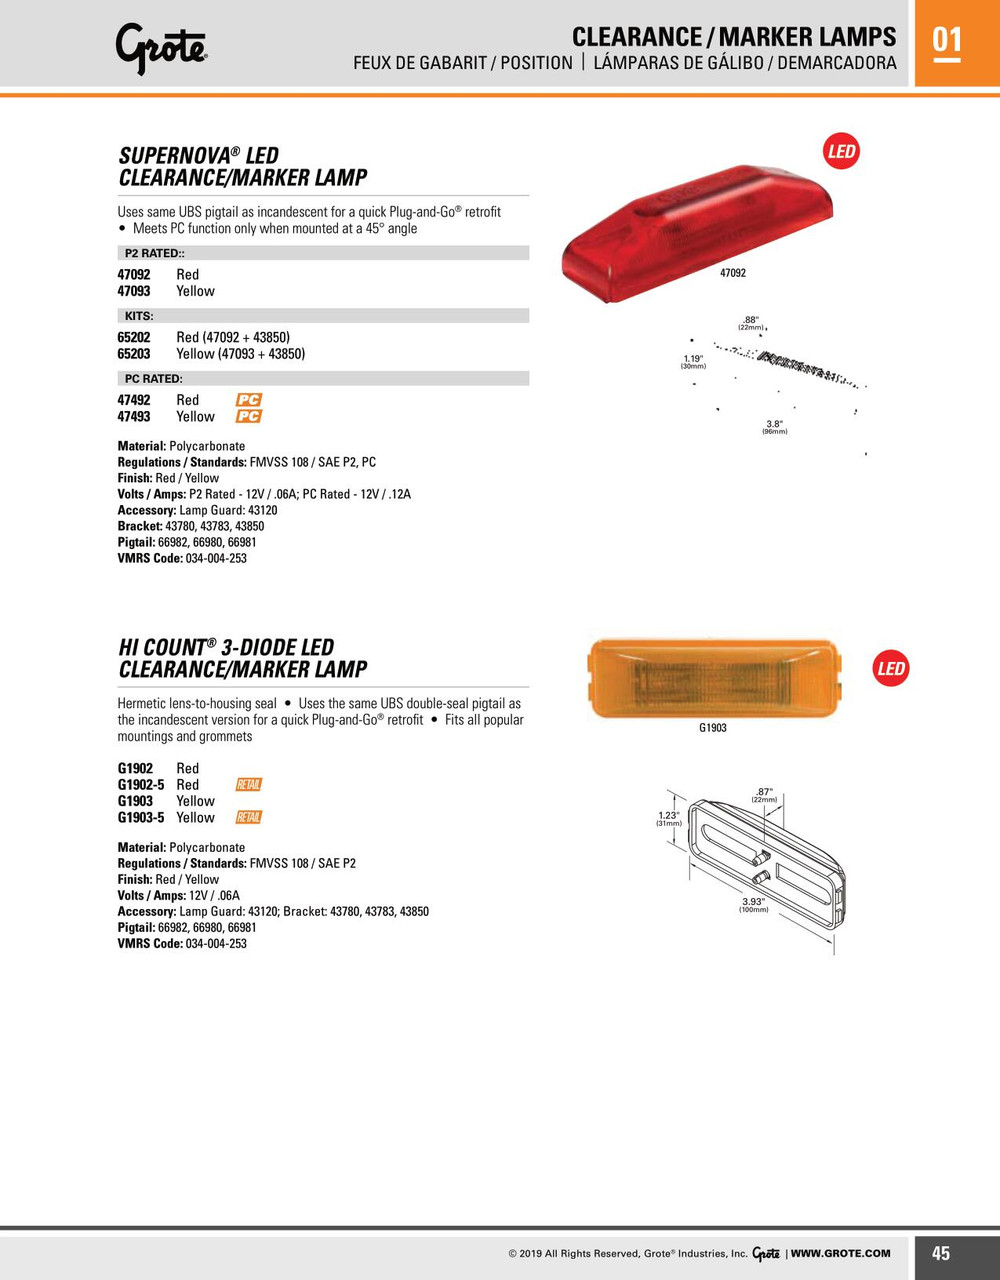 SuperNova® LED Clearance/Marker Lamp - Red  47092